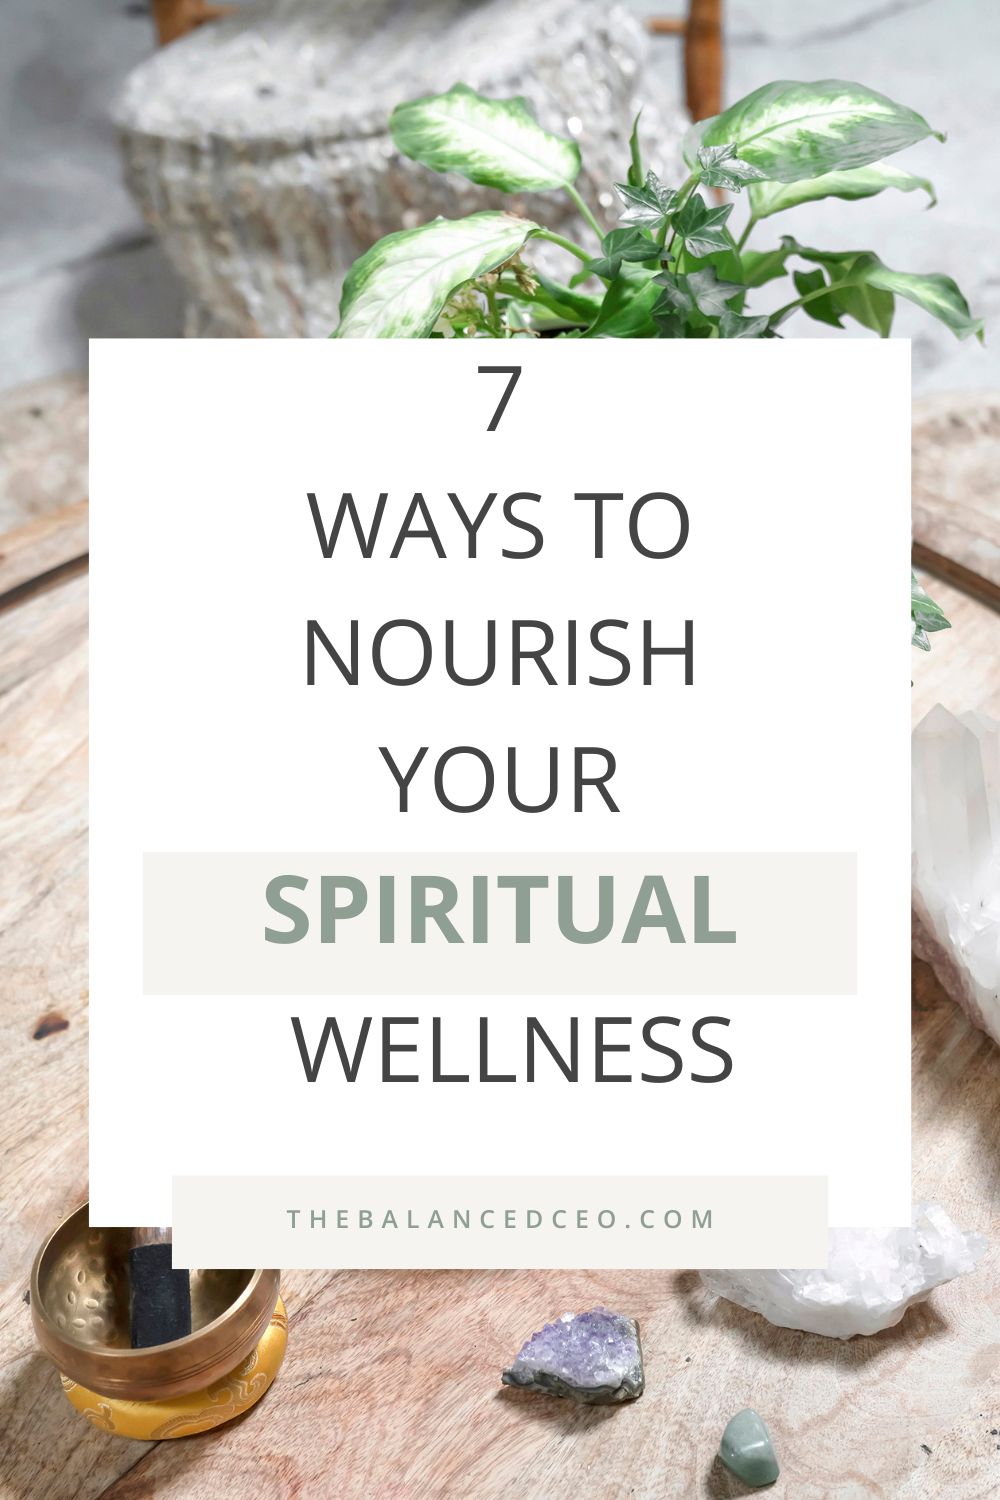 7 Unique Ways to Nourish Your Spiritual Wellness